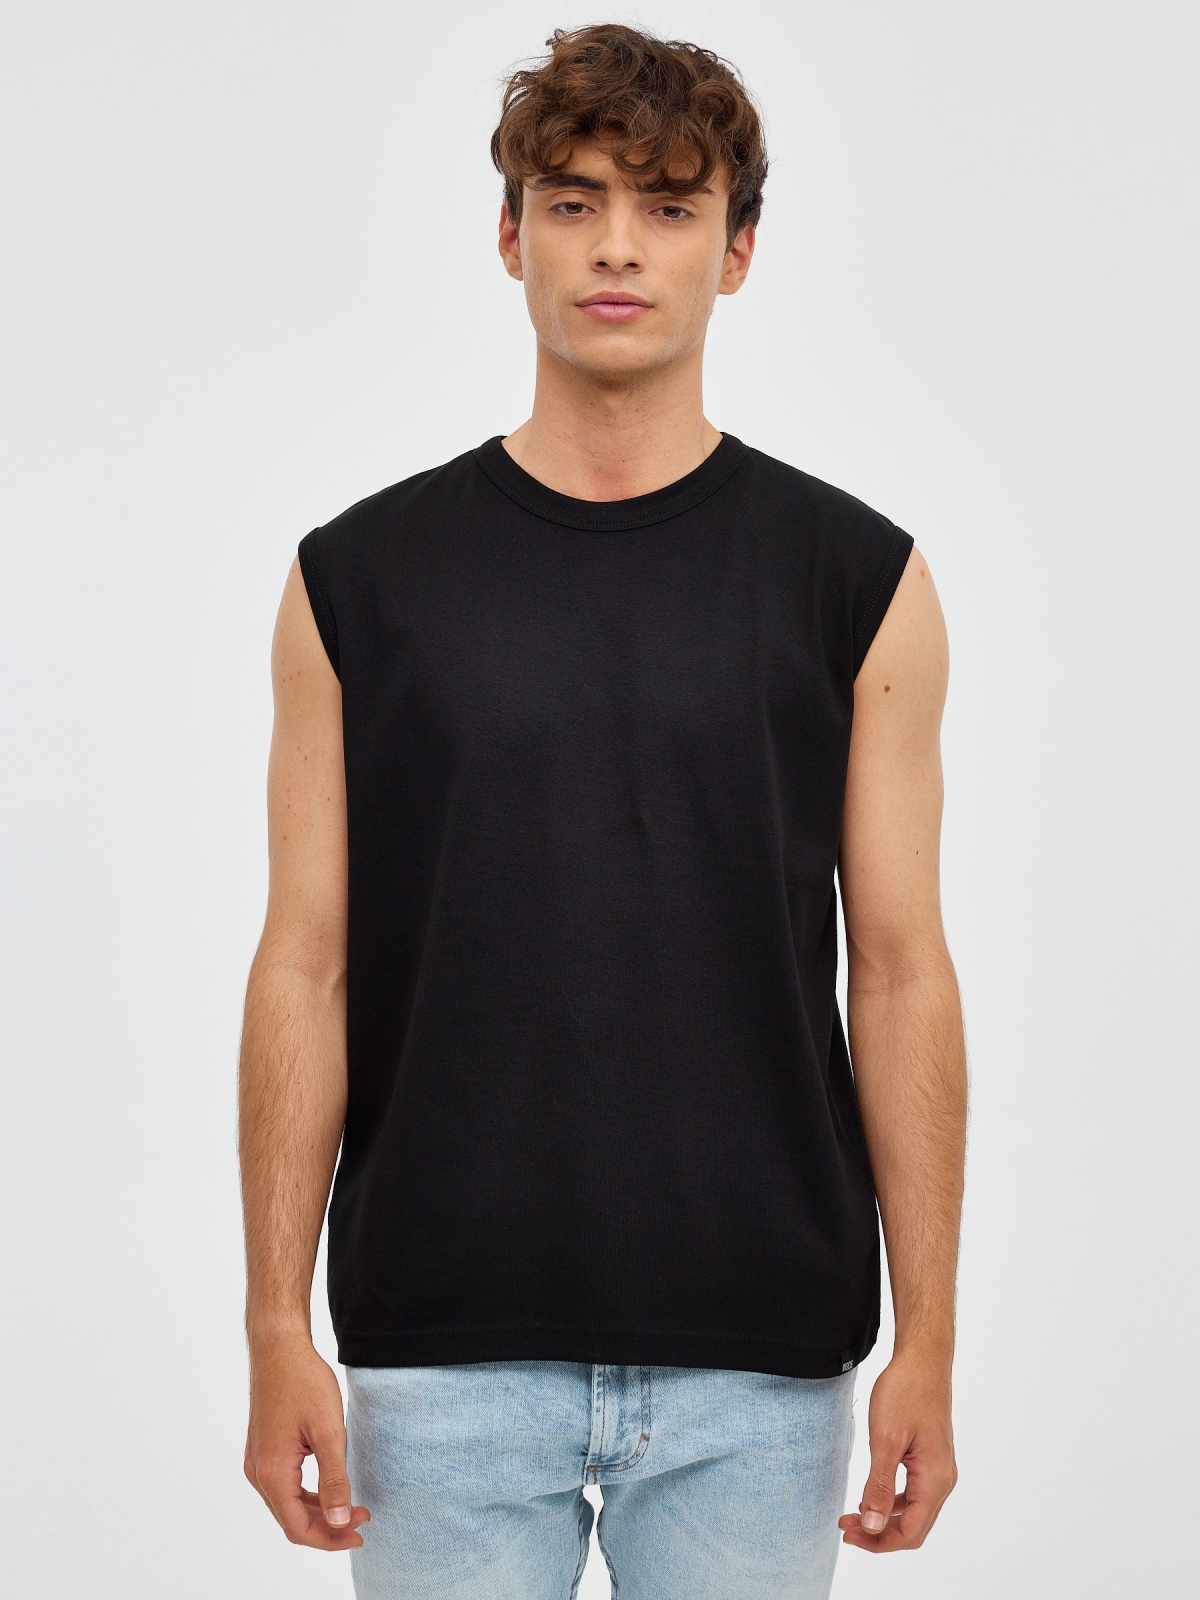 Camiseta básica sin mangas negro vista media frontal